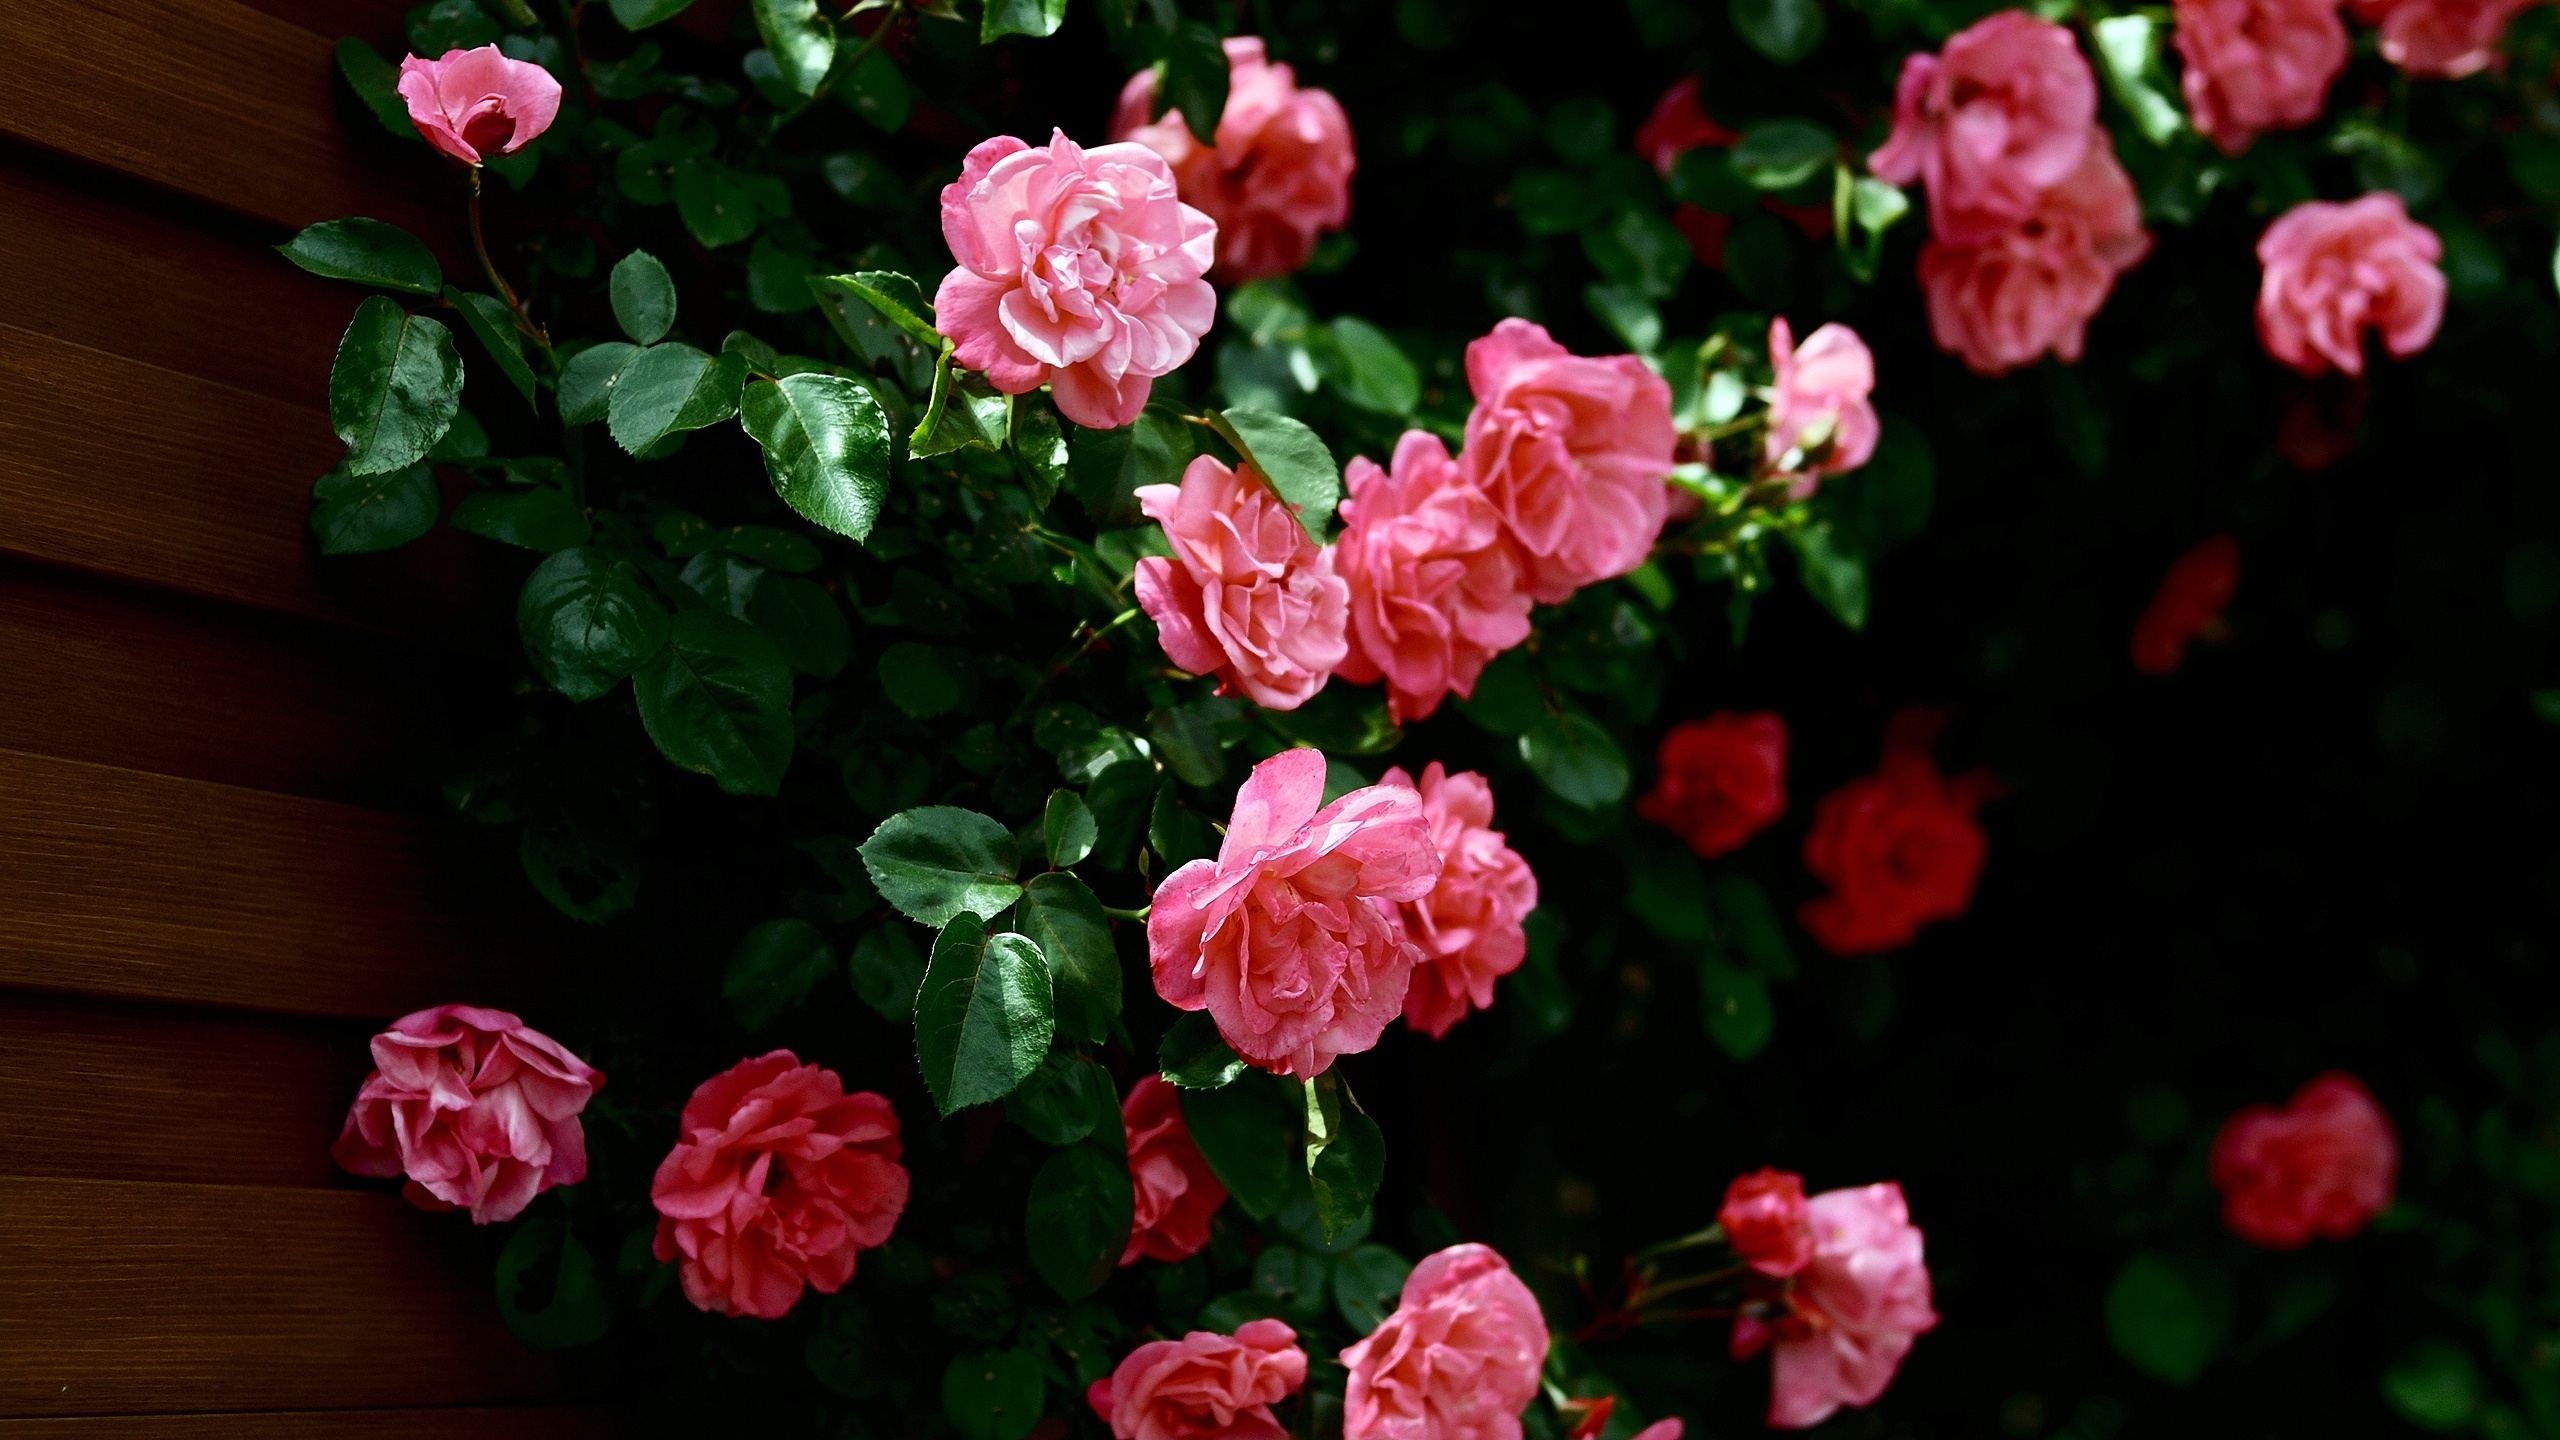 floral wallpaper hd,flower,flowering plant,garden roses,pink,rose